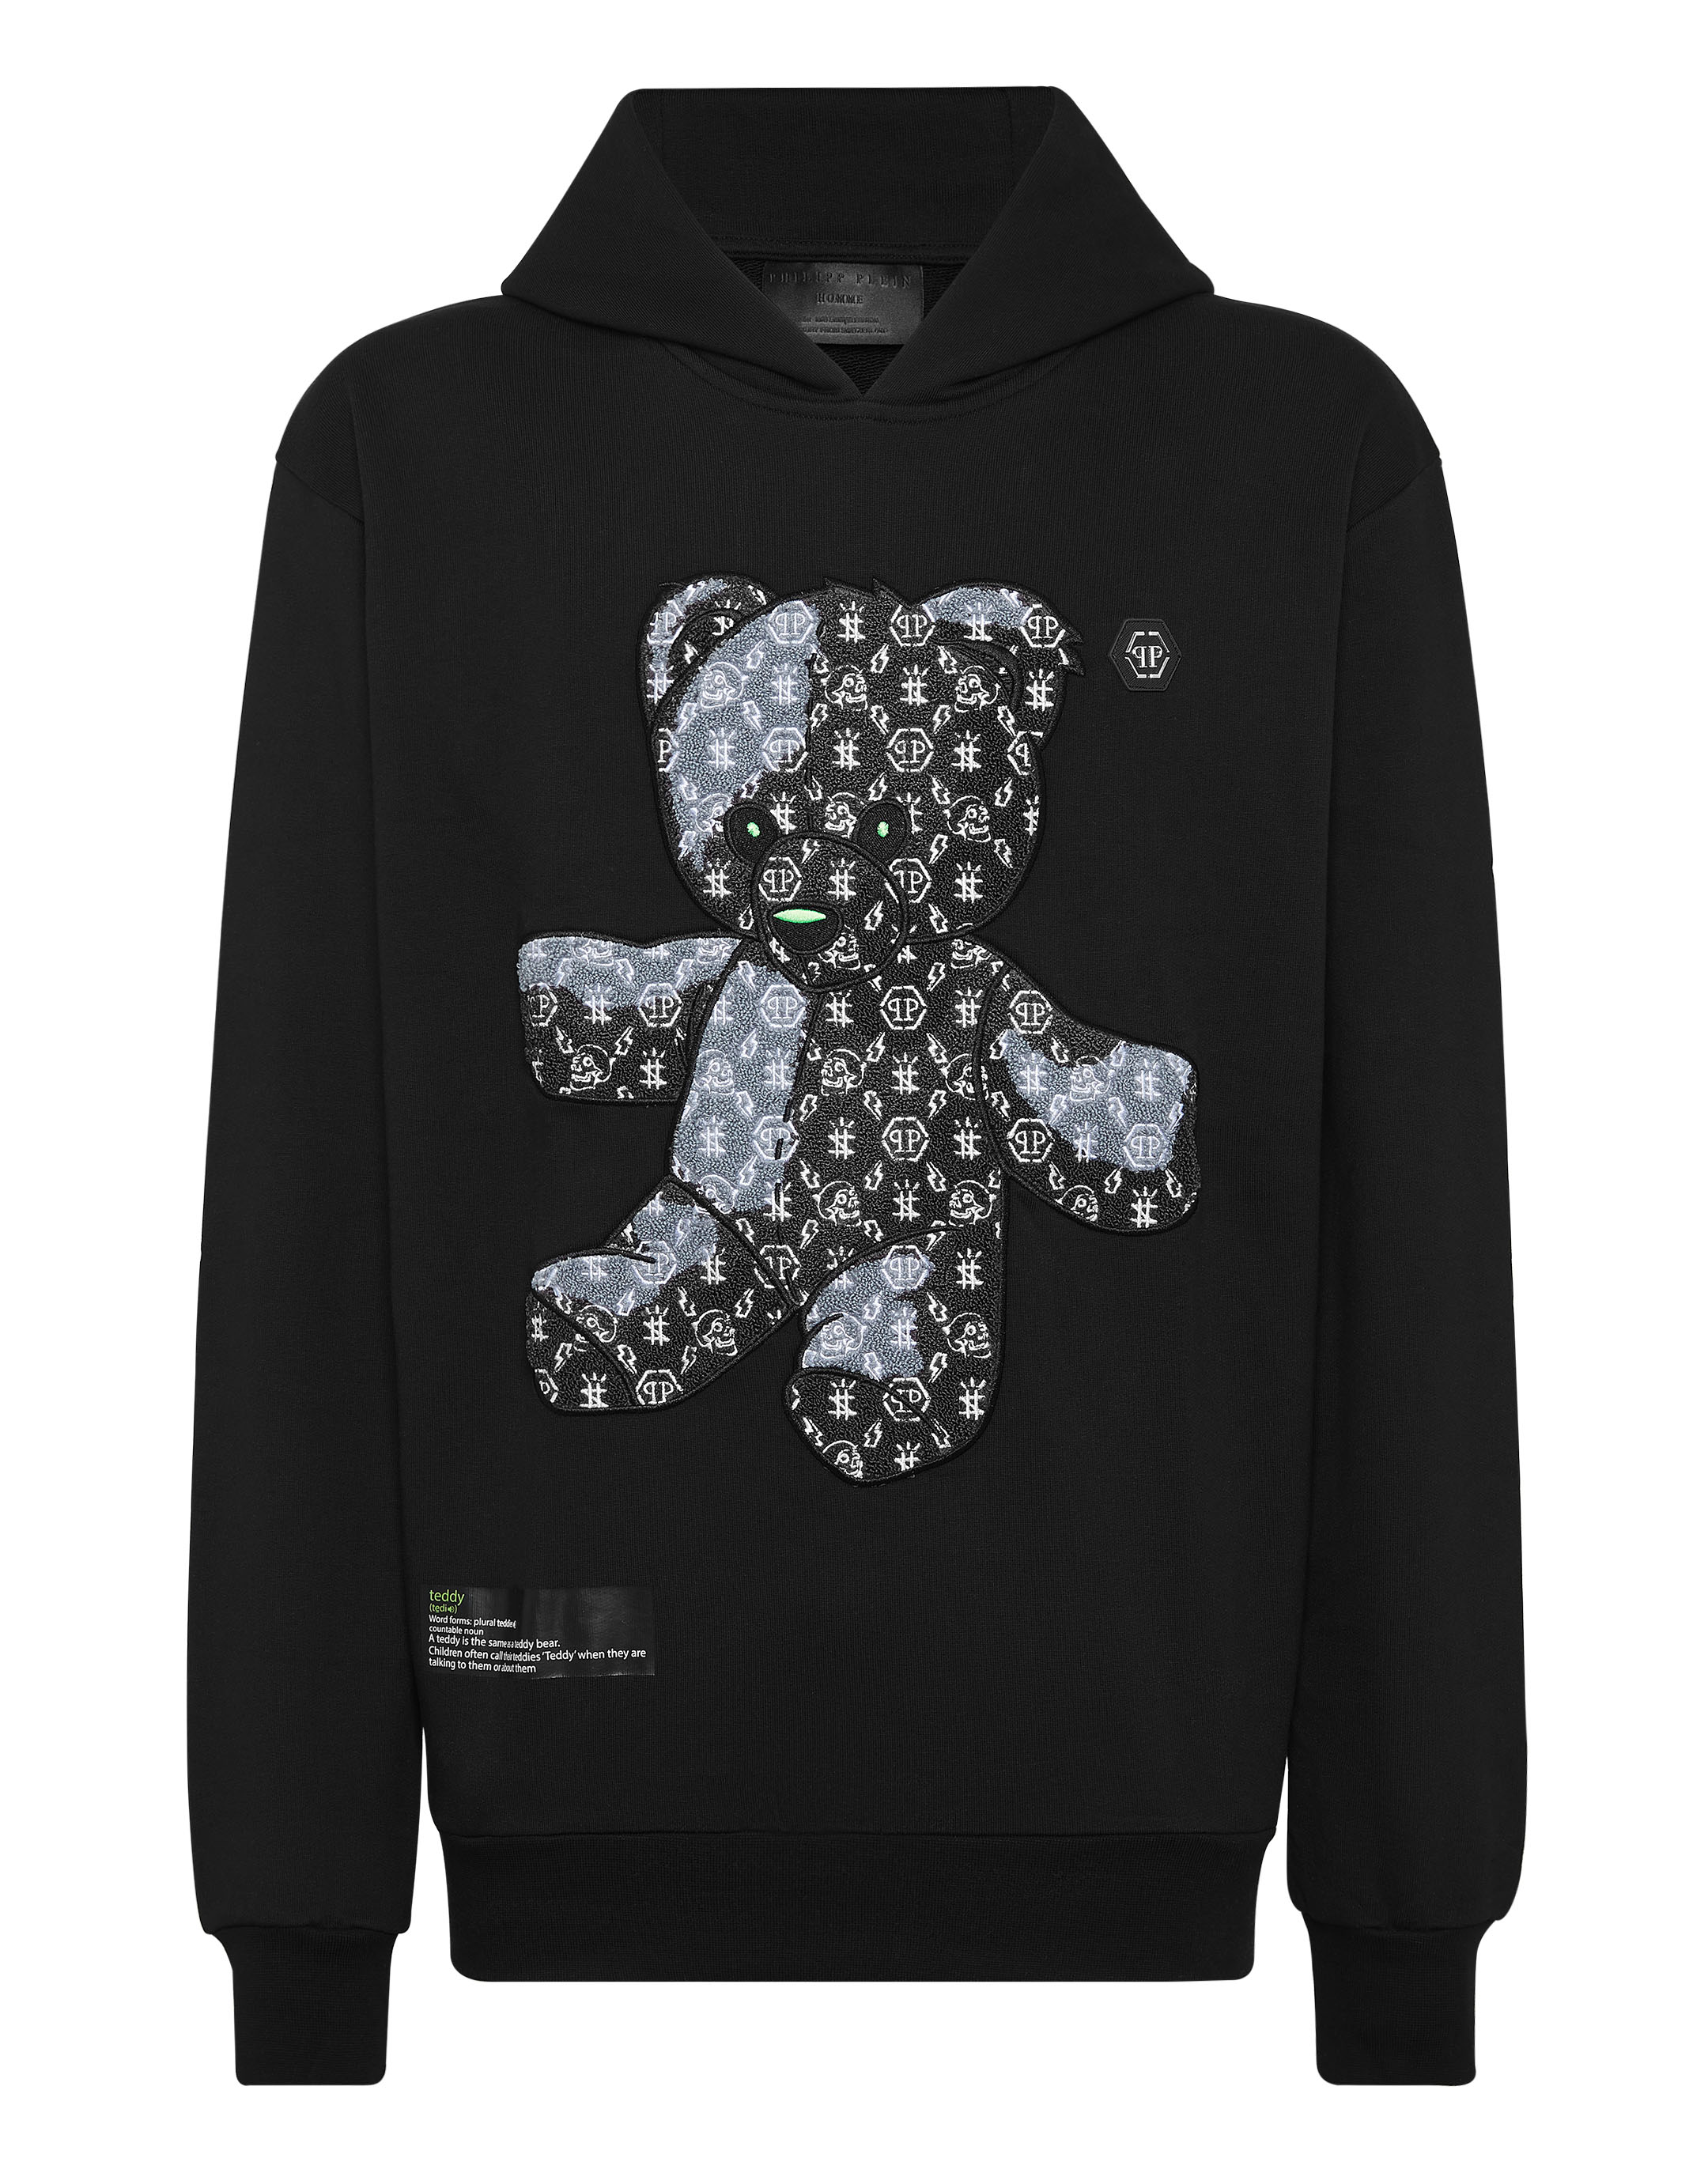 Teddy bear' Men's Premium Sweatshirt